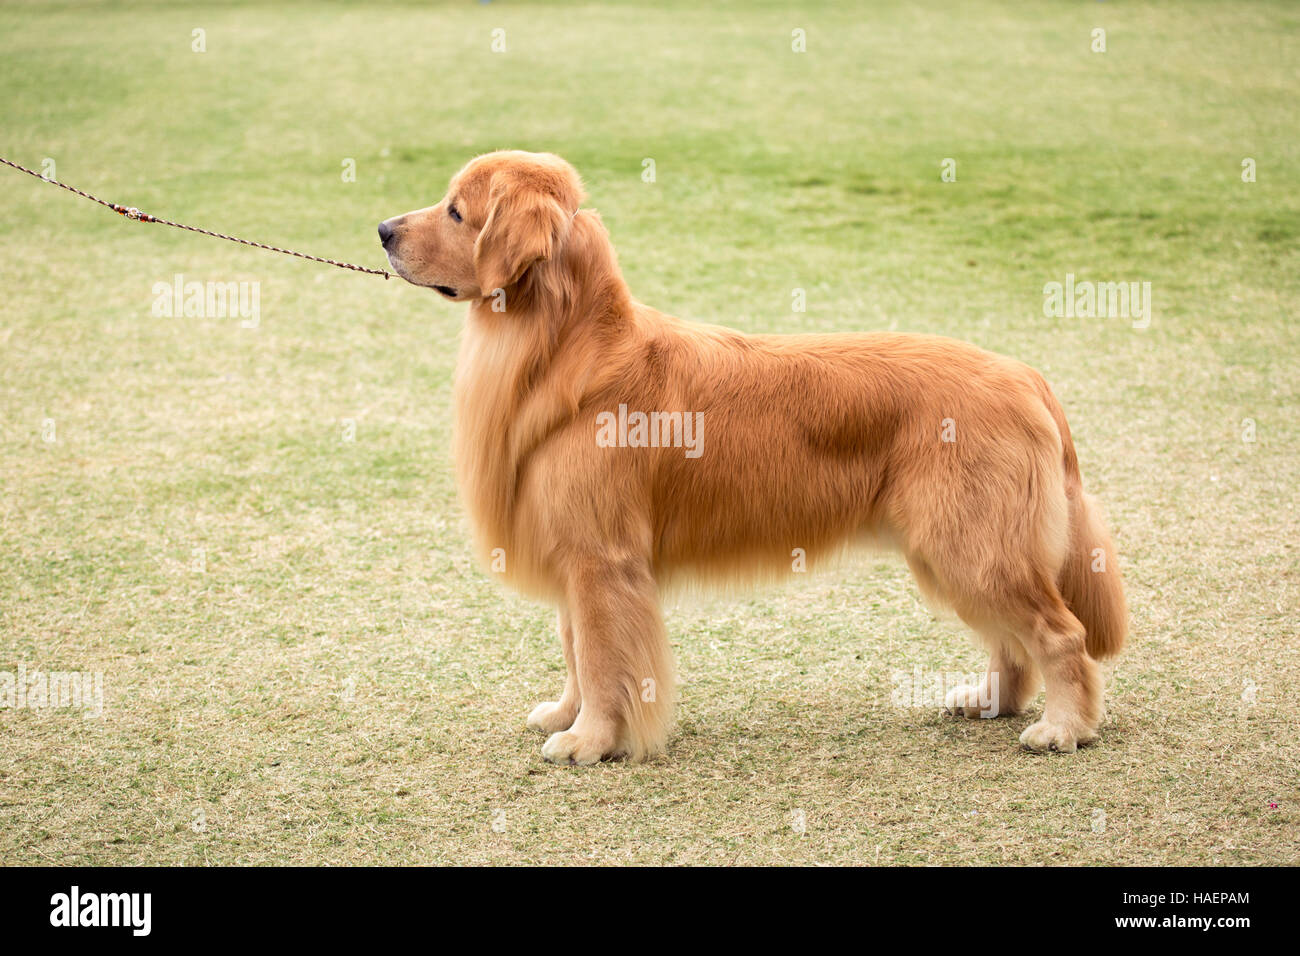 Golden Retriever standing at a dog show Stock Photo